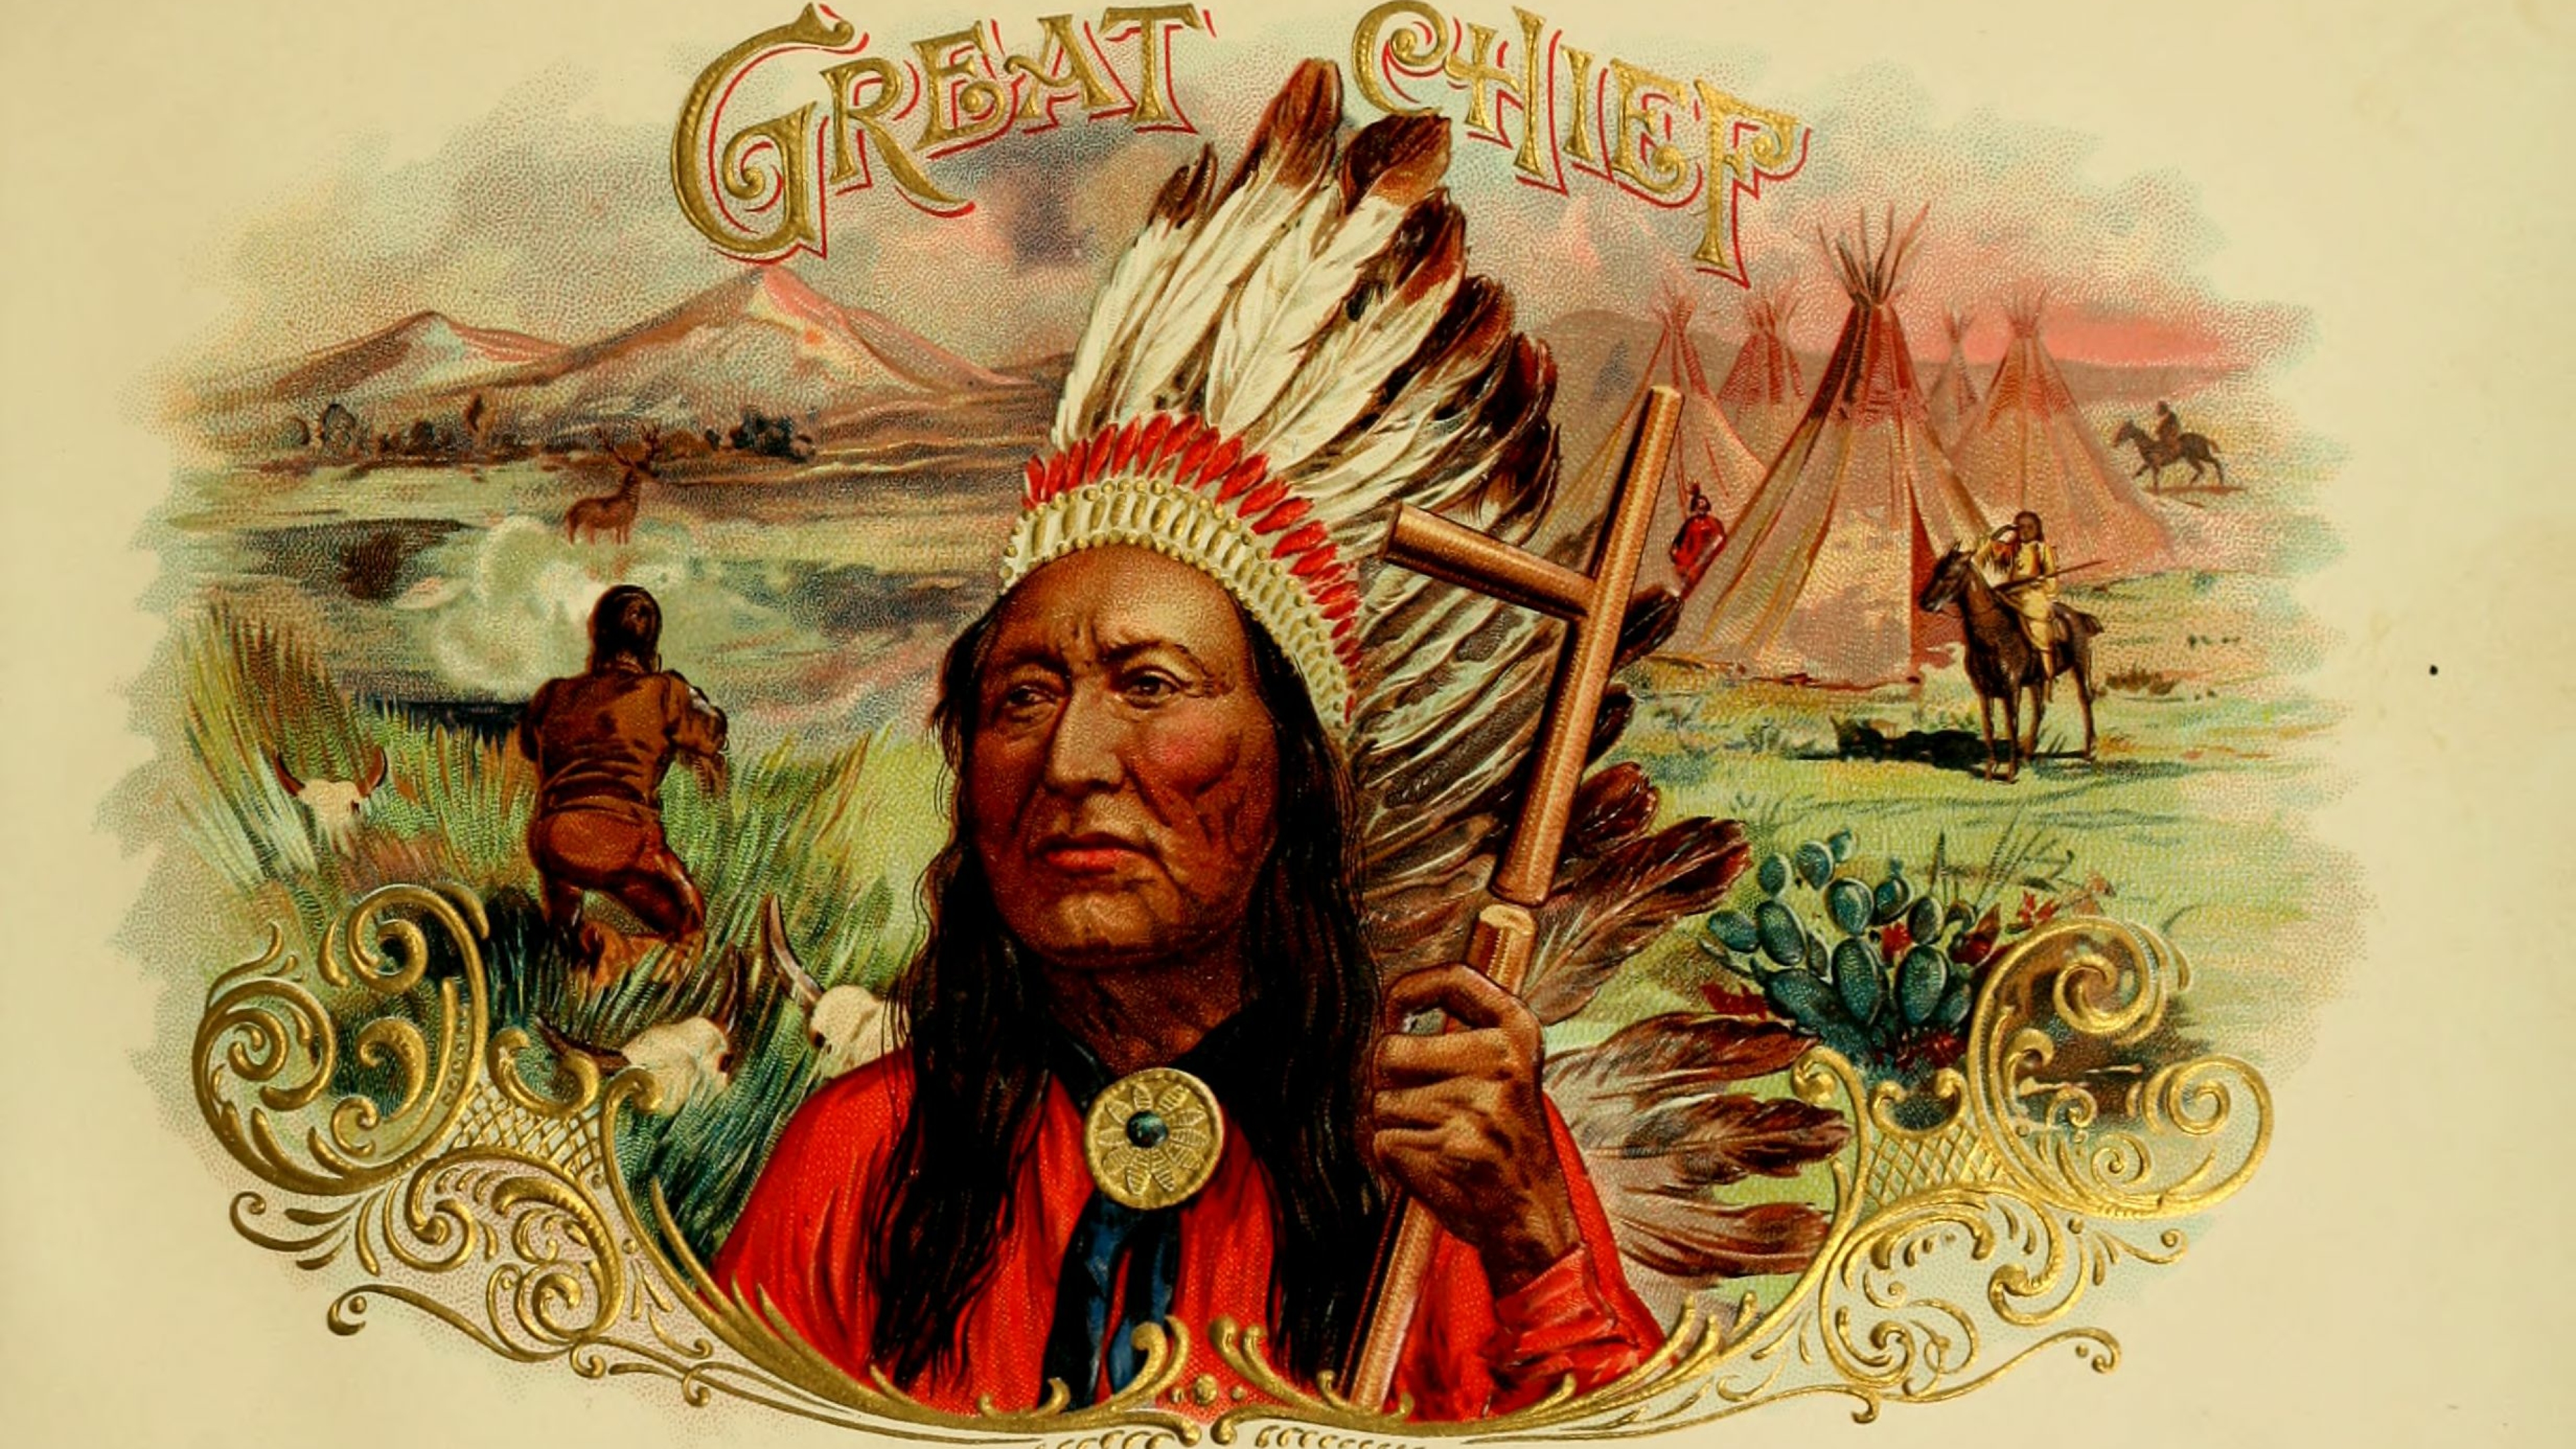 General 3840x2160 Native Americans vintage USA people artwork lithograph headdress